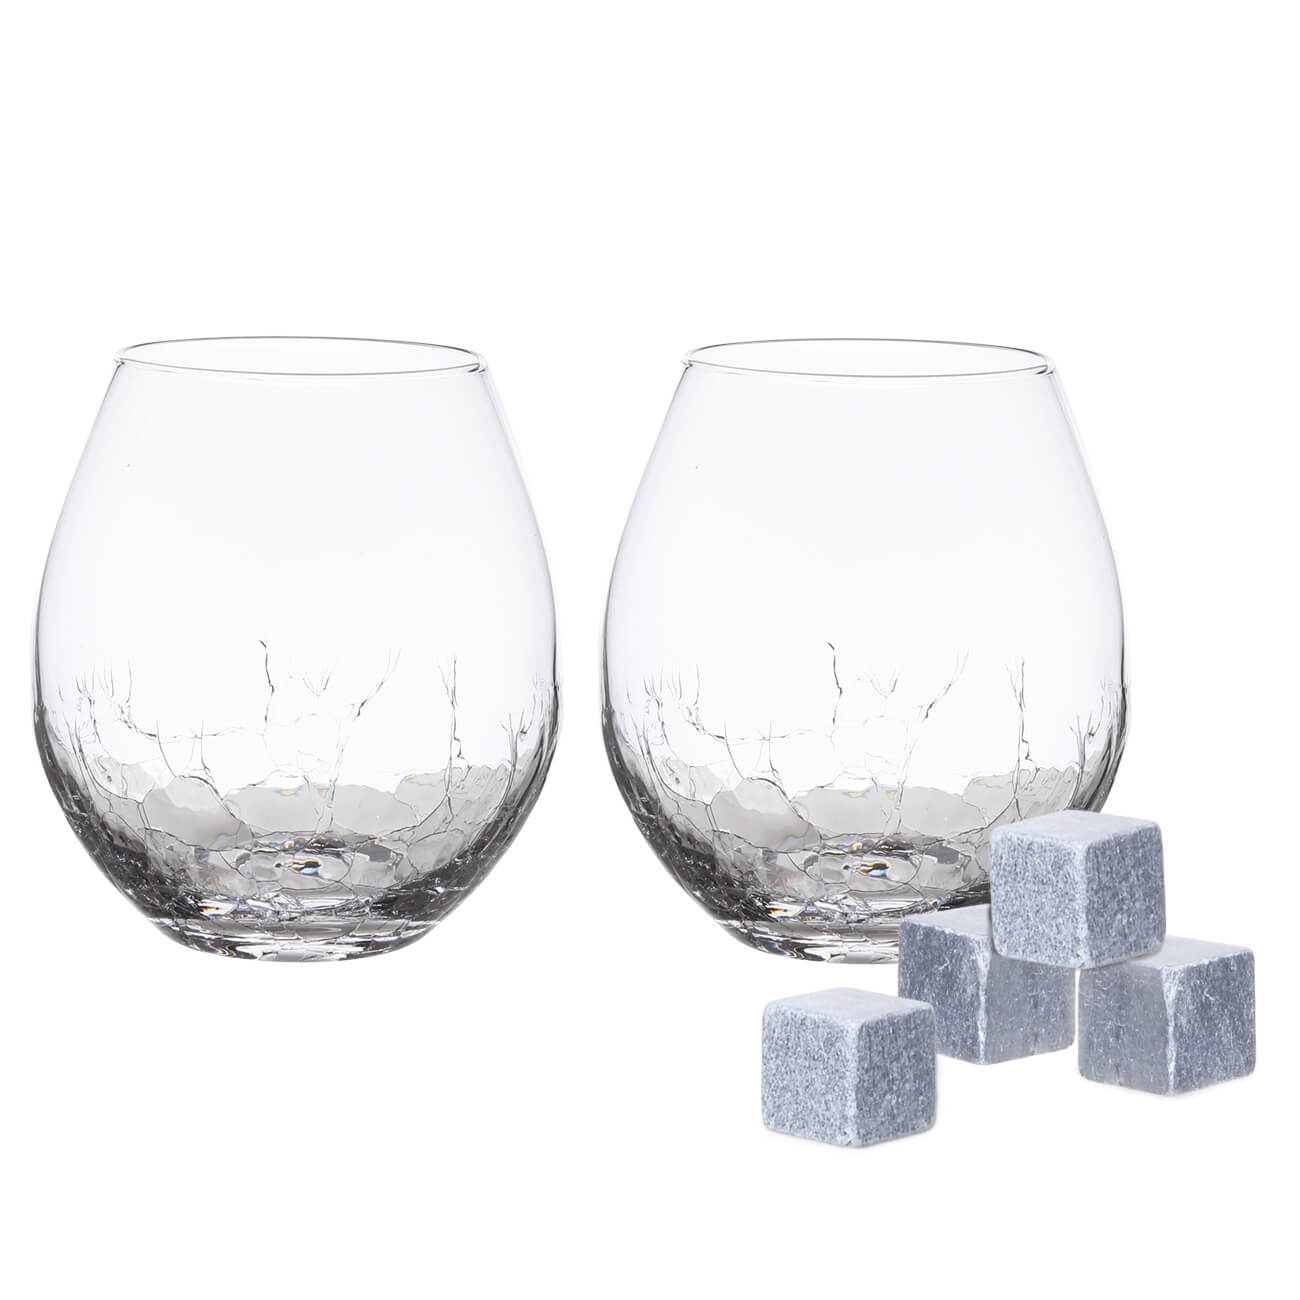 Набор для виски, 2 перс, 6 пр, стаканы/кубики, стекло/стеатит, Кракелюр, Ice кубики 12 шт кубики для умников арифметика